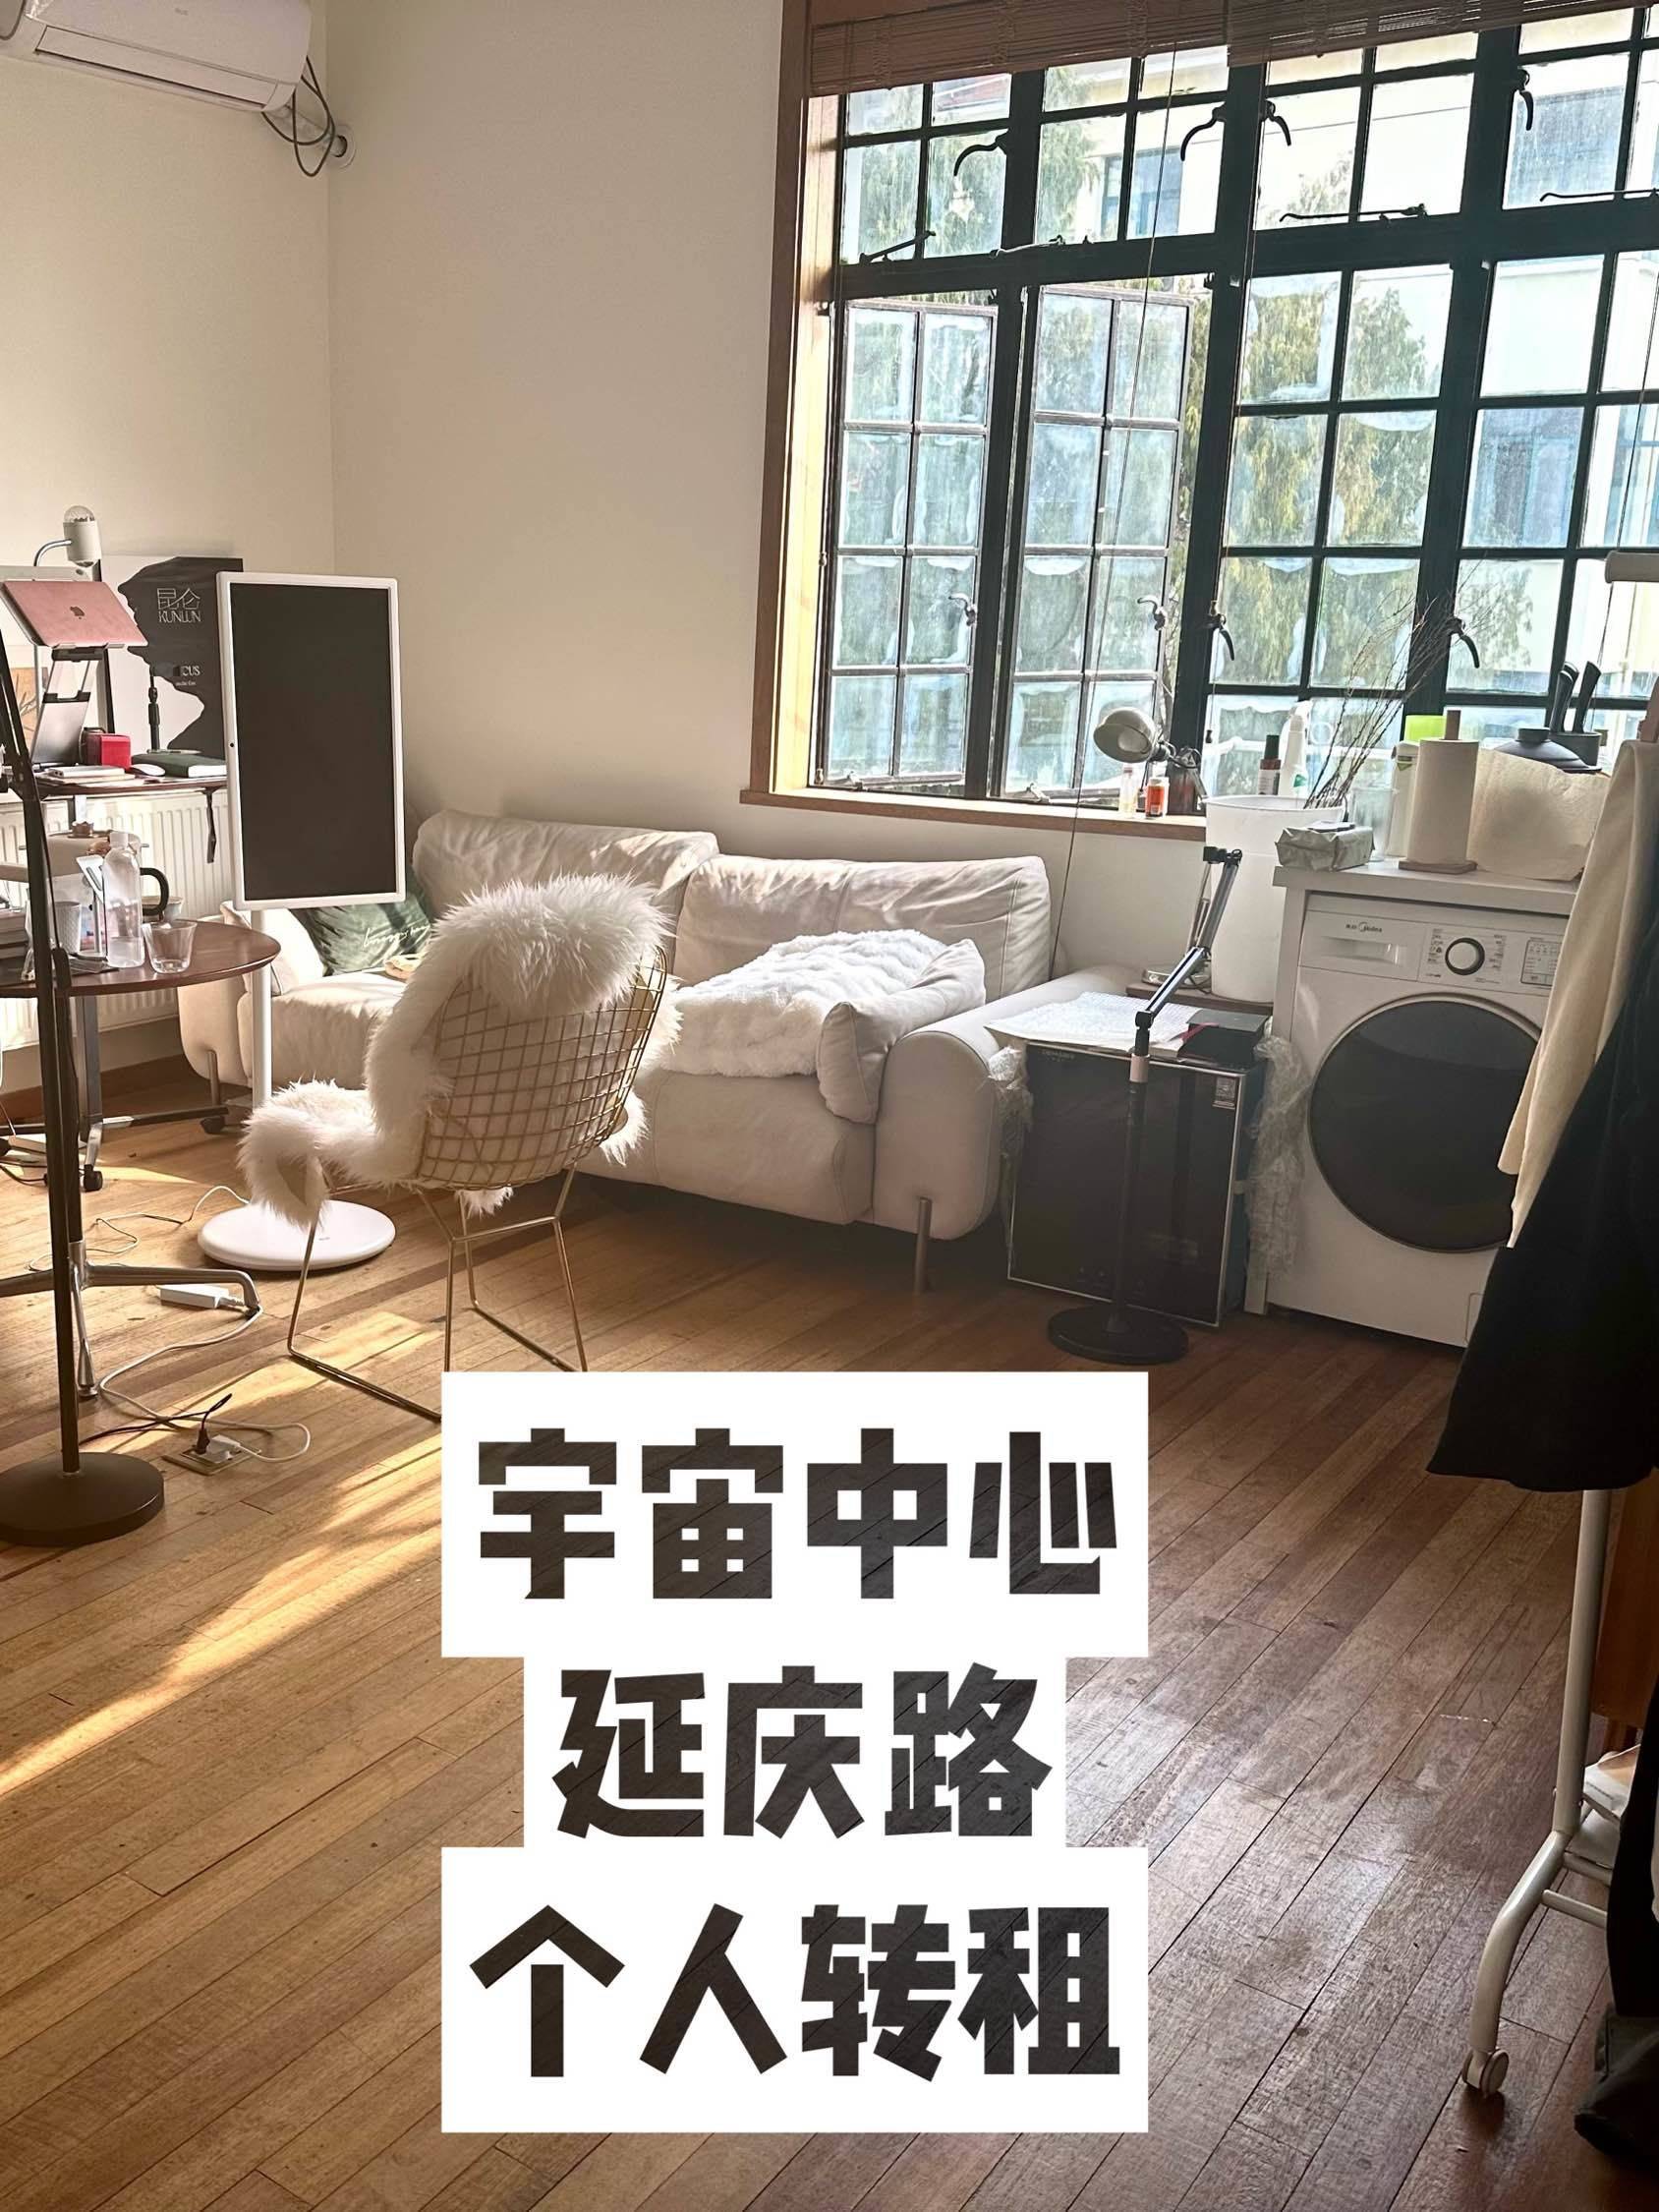 Shanghai-Xuhui-Cozy Home,Clean&Comfy,No Gender Limit,Hustle & Bustle,“Friends”,Chilled,LGBTQ Friendly,Pet Friendly